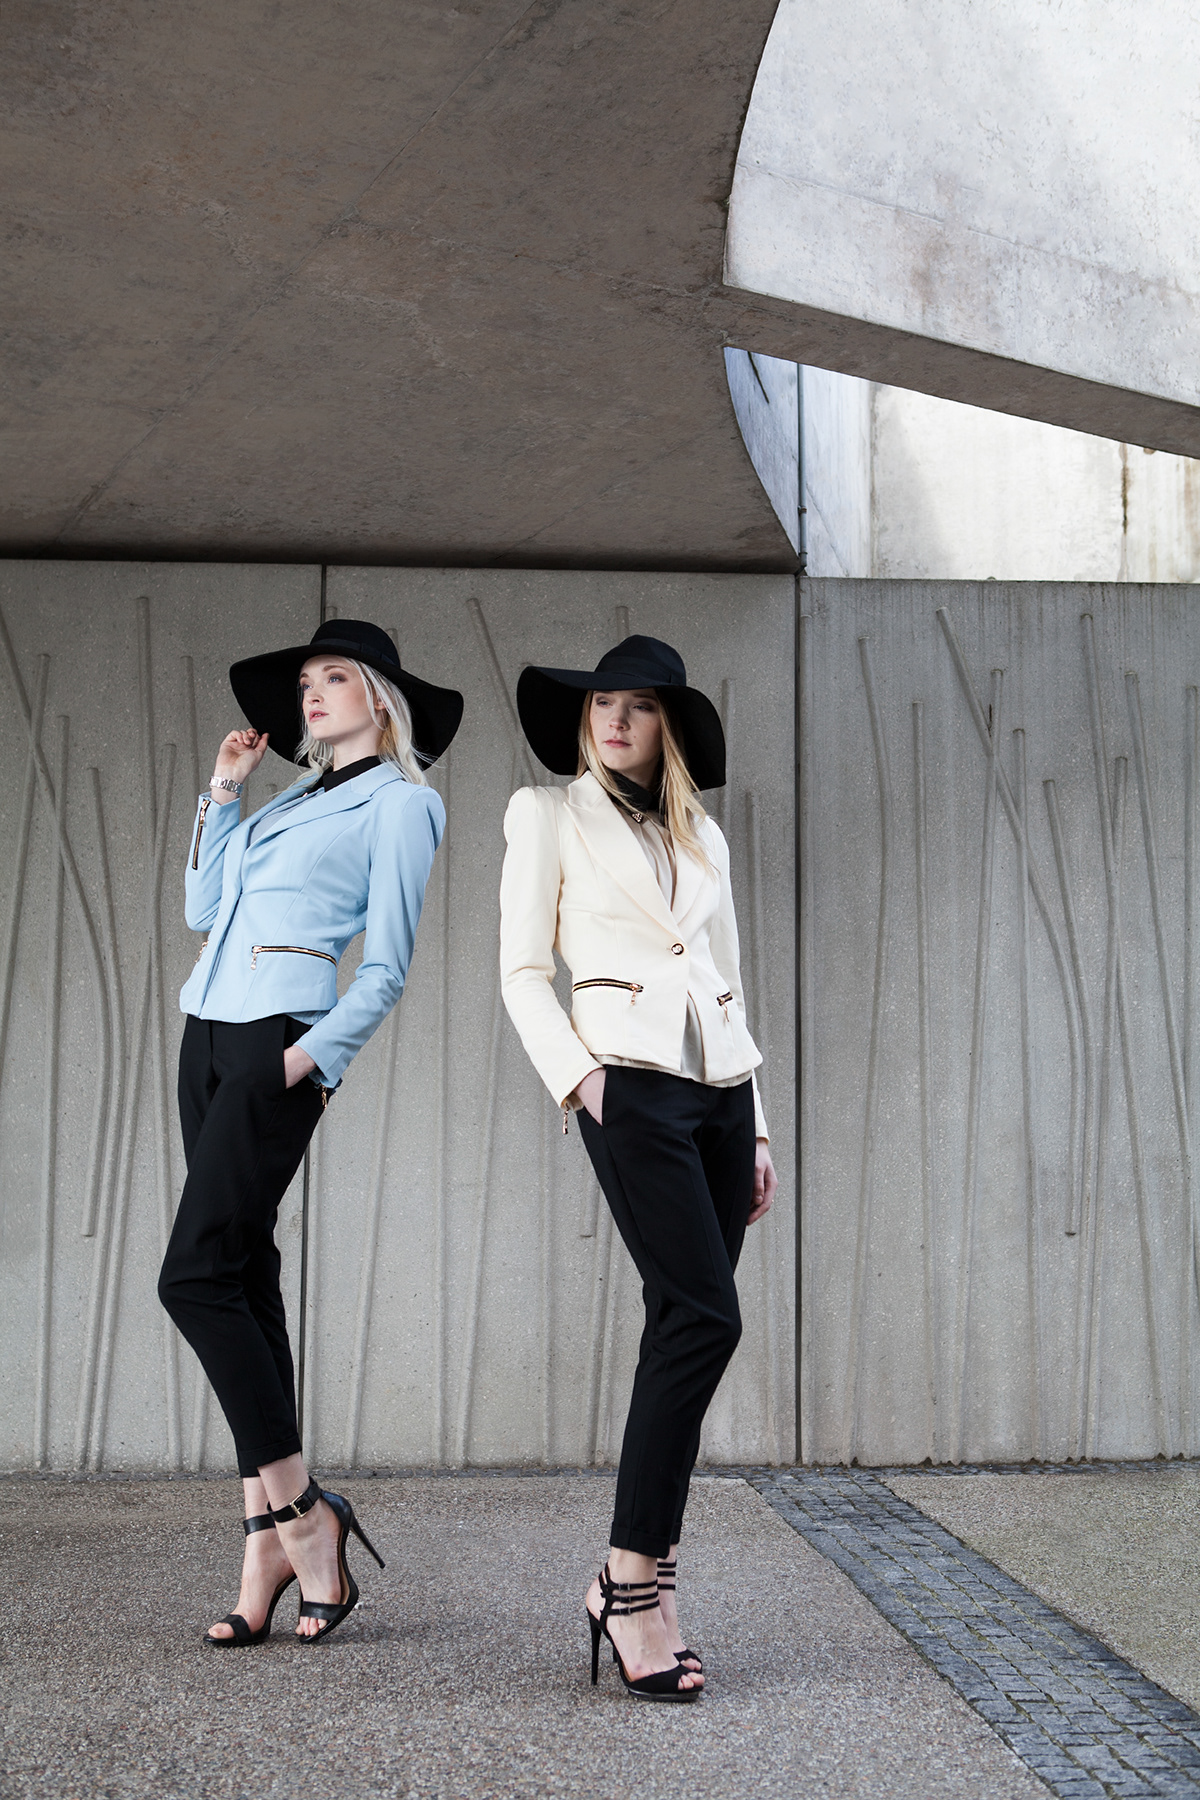 editorial concrete jungle edinburgh models tailored pastel Powder Blue pose designer symmetry